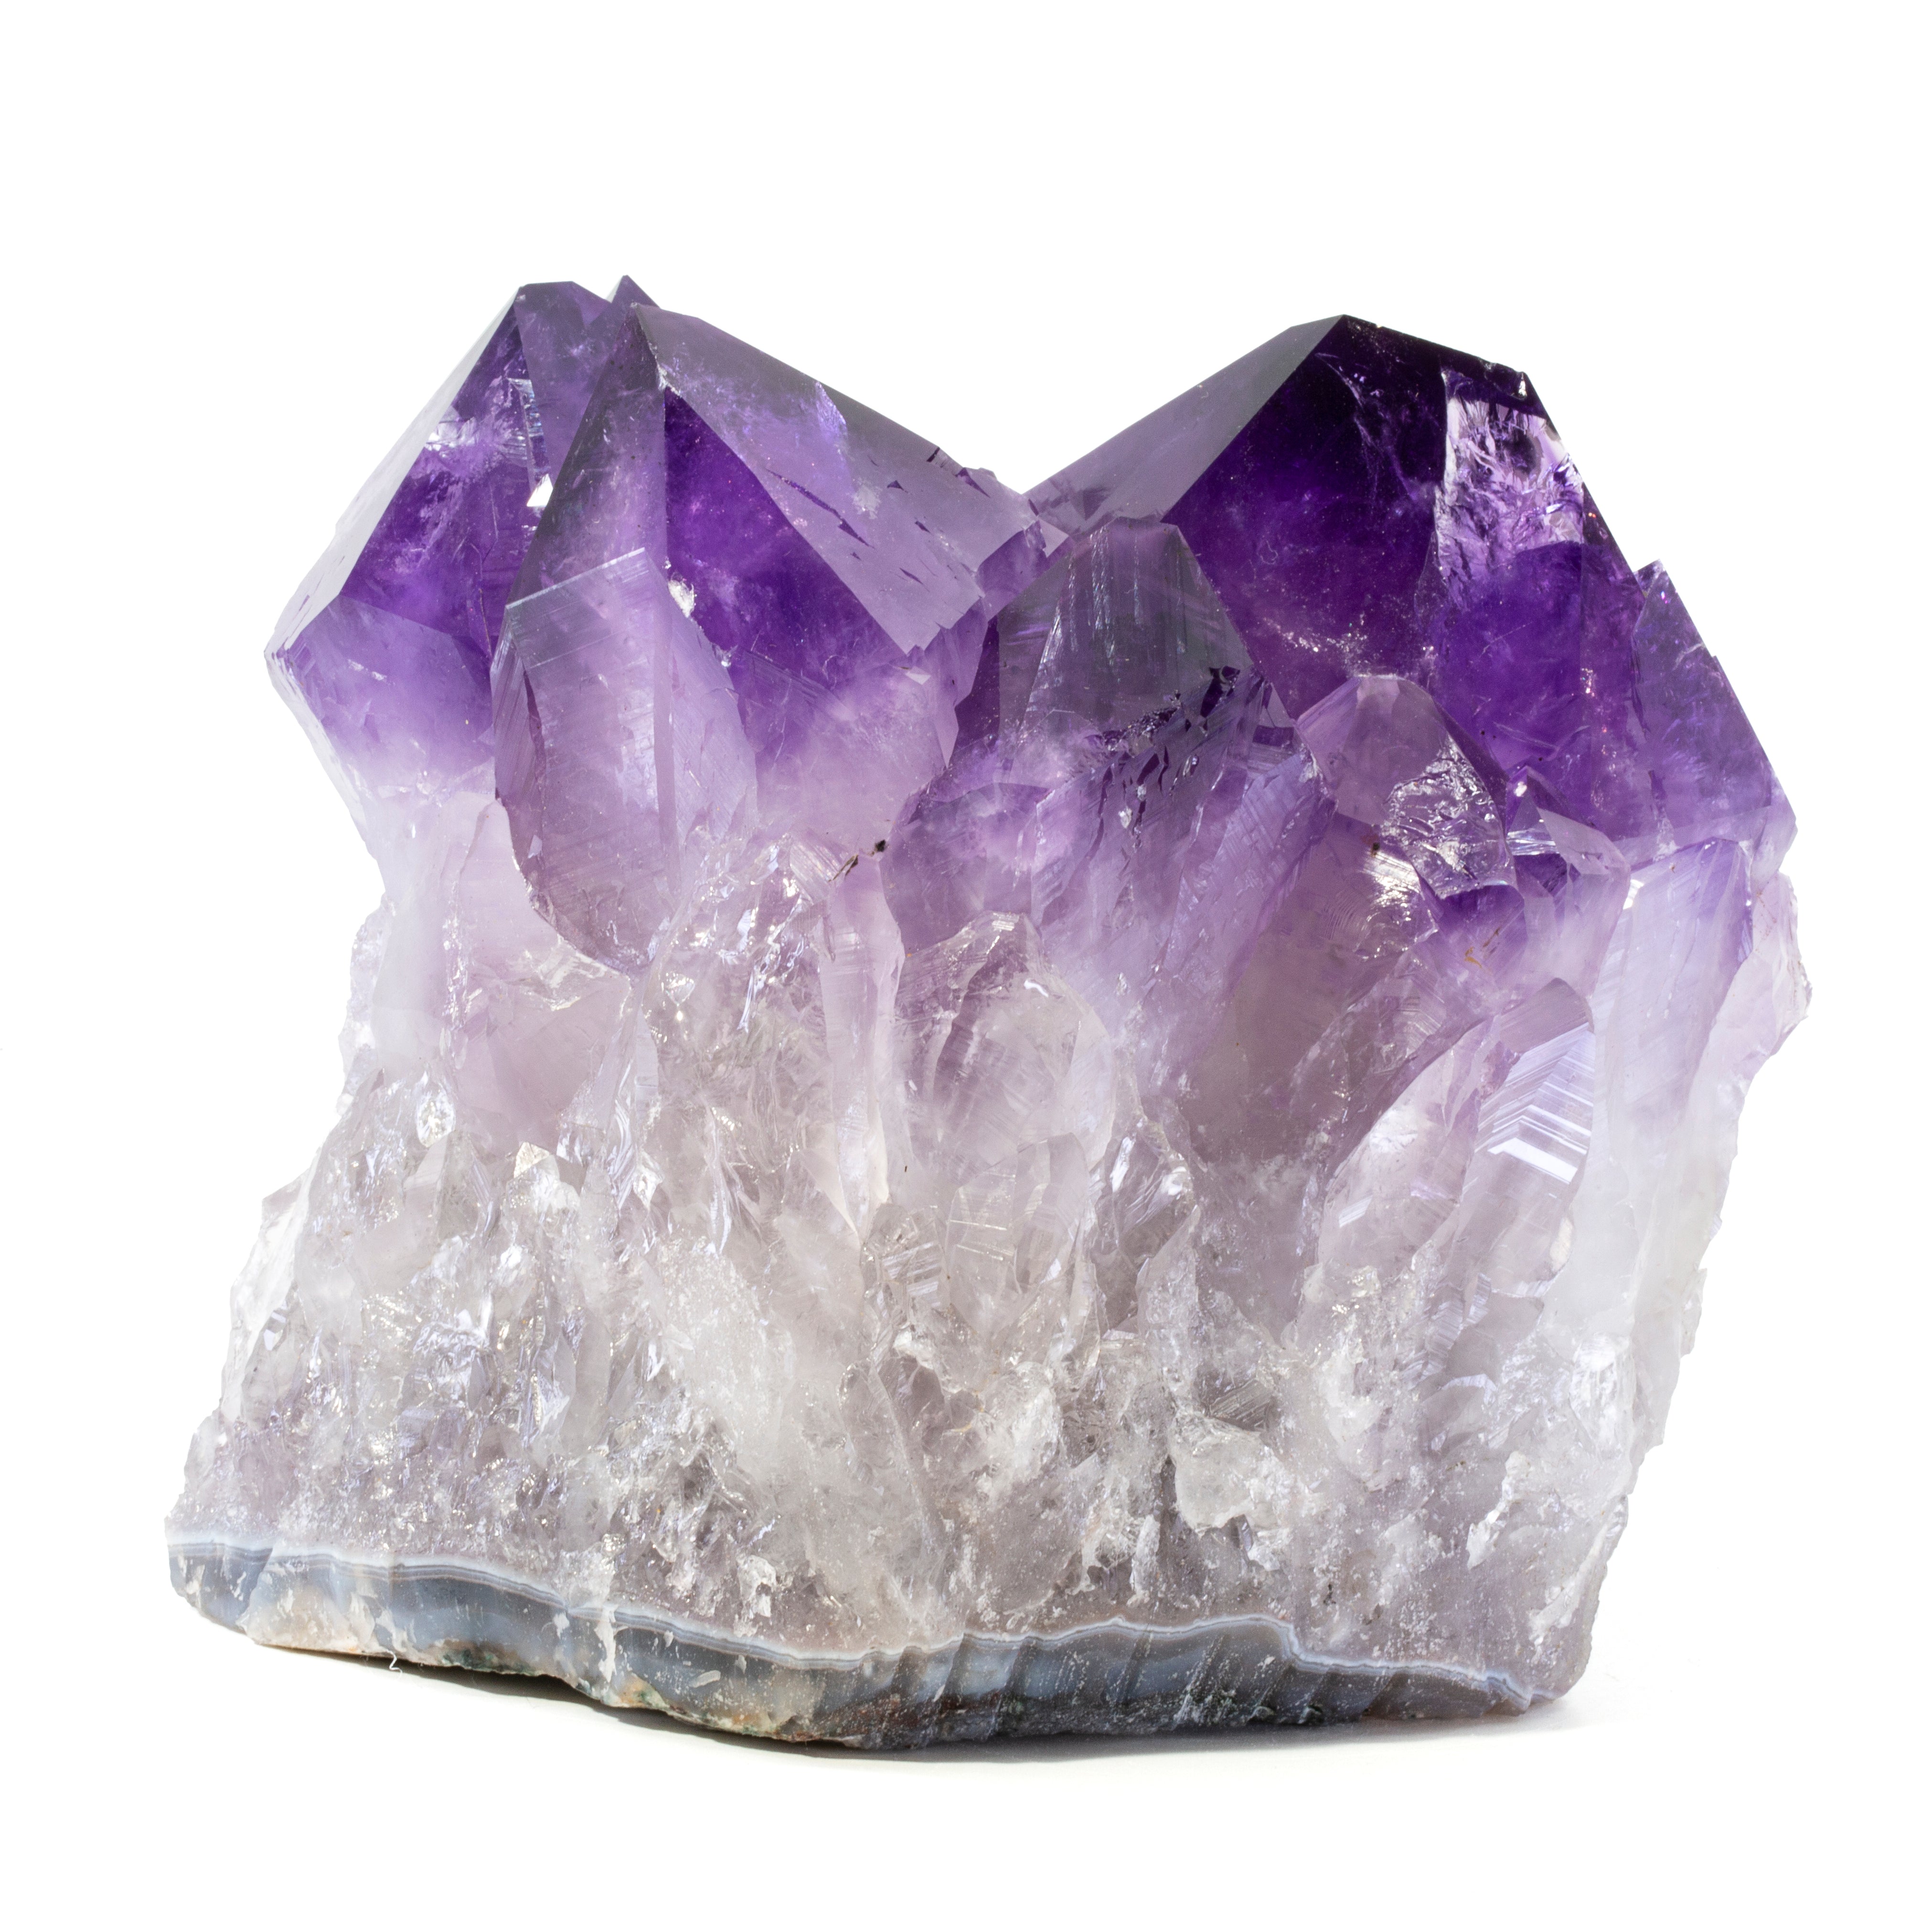 Amethyst 5.8 inch 6.2 lb Natural Crystal Cluster - Brazil - JJX-239 - Crystalarium